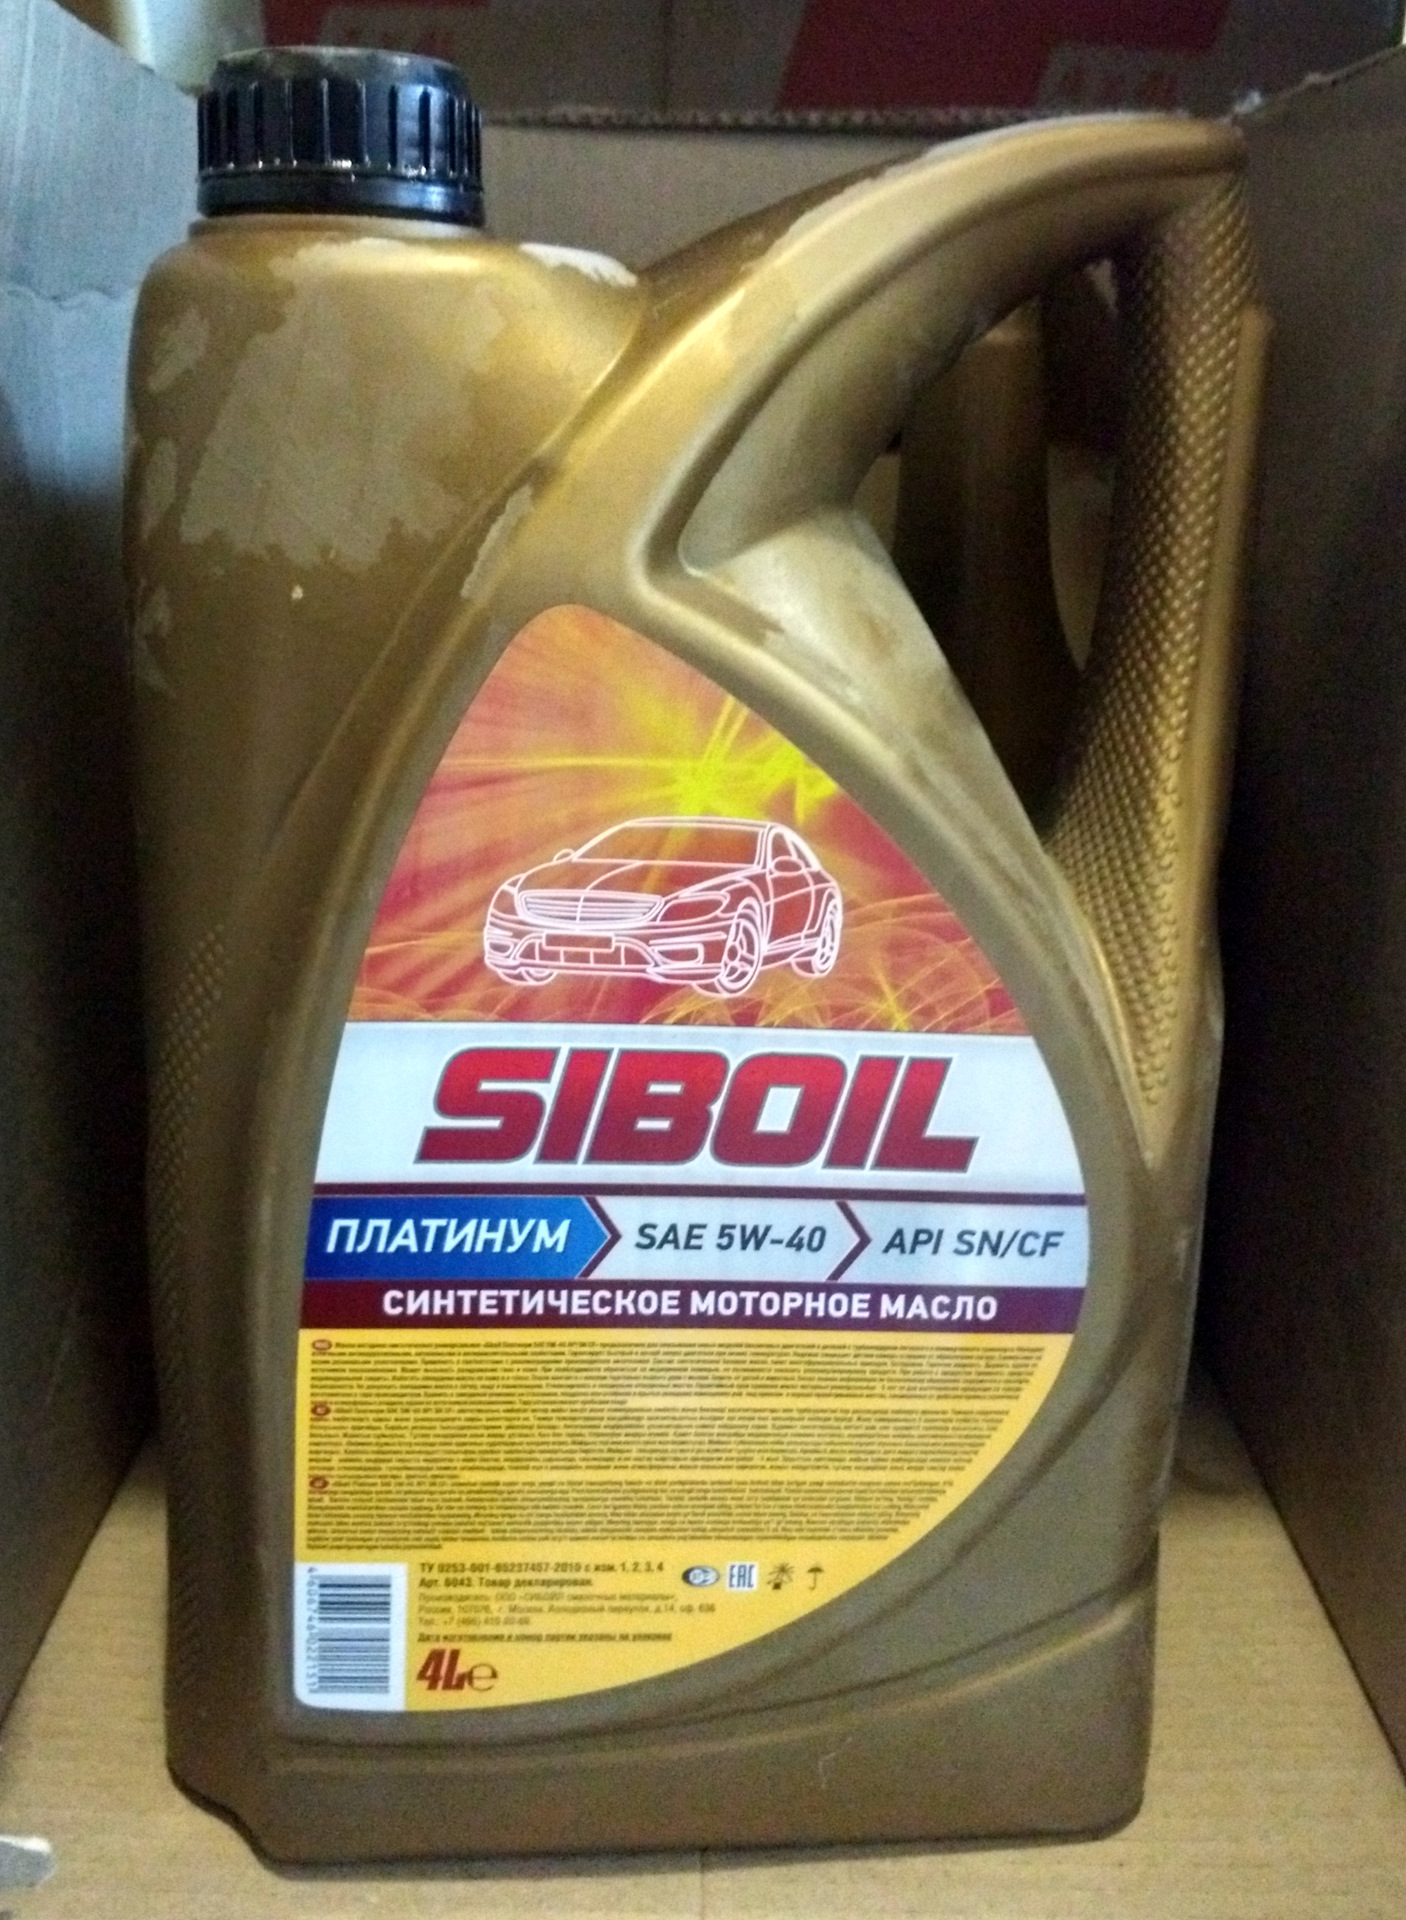 Моторное масло полусинтетика 5w40 отзывы. Моторное масло Сибойл 5w 40. Масло Siboil 5w-40 светофор. Масло моторное Sintec ( 5w40 .SAE Synt. 4 Л.). Масло Сибойл супер полусинтетика.